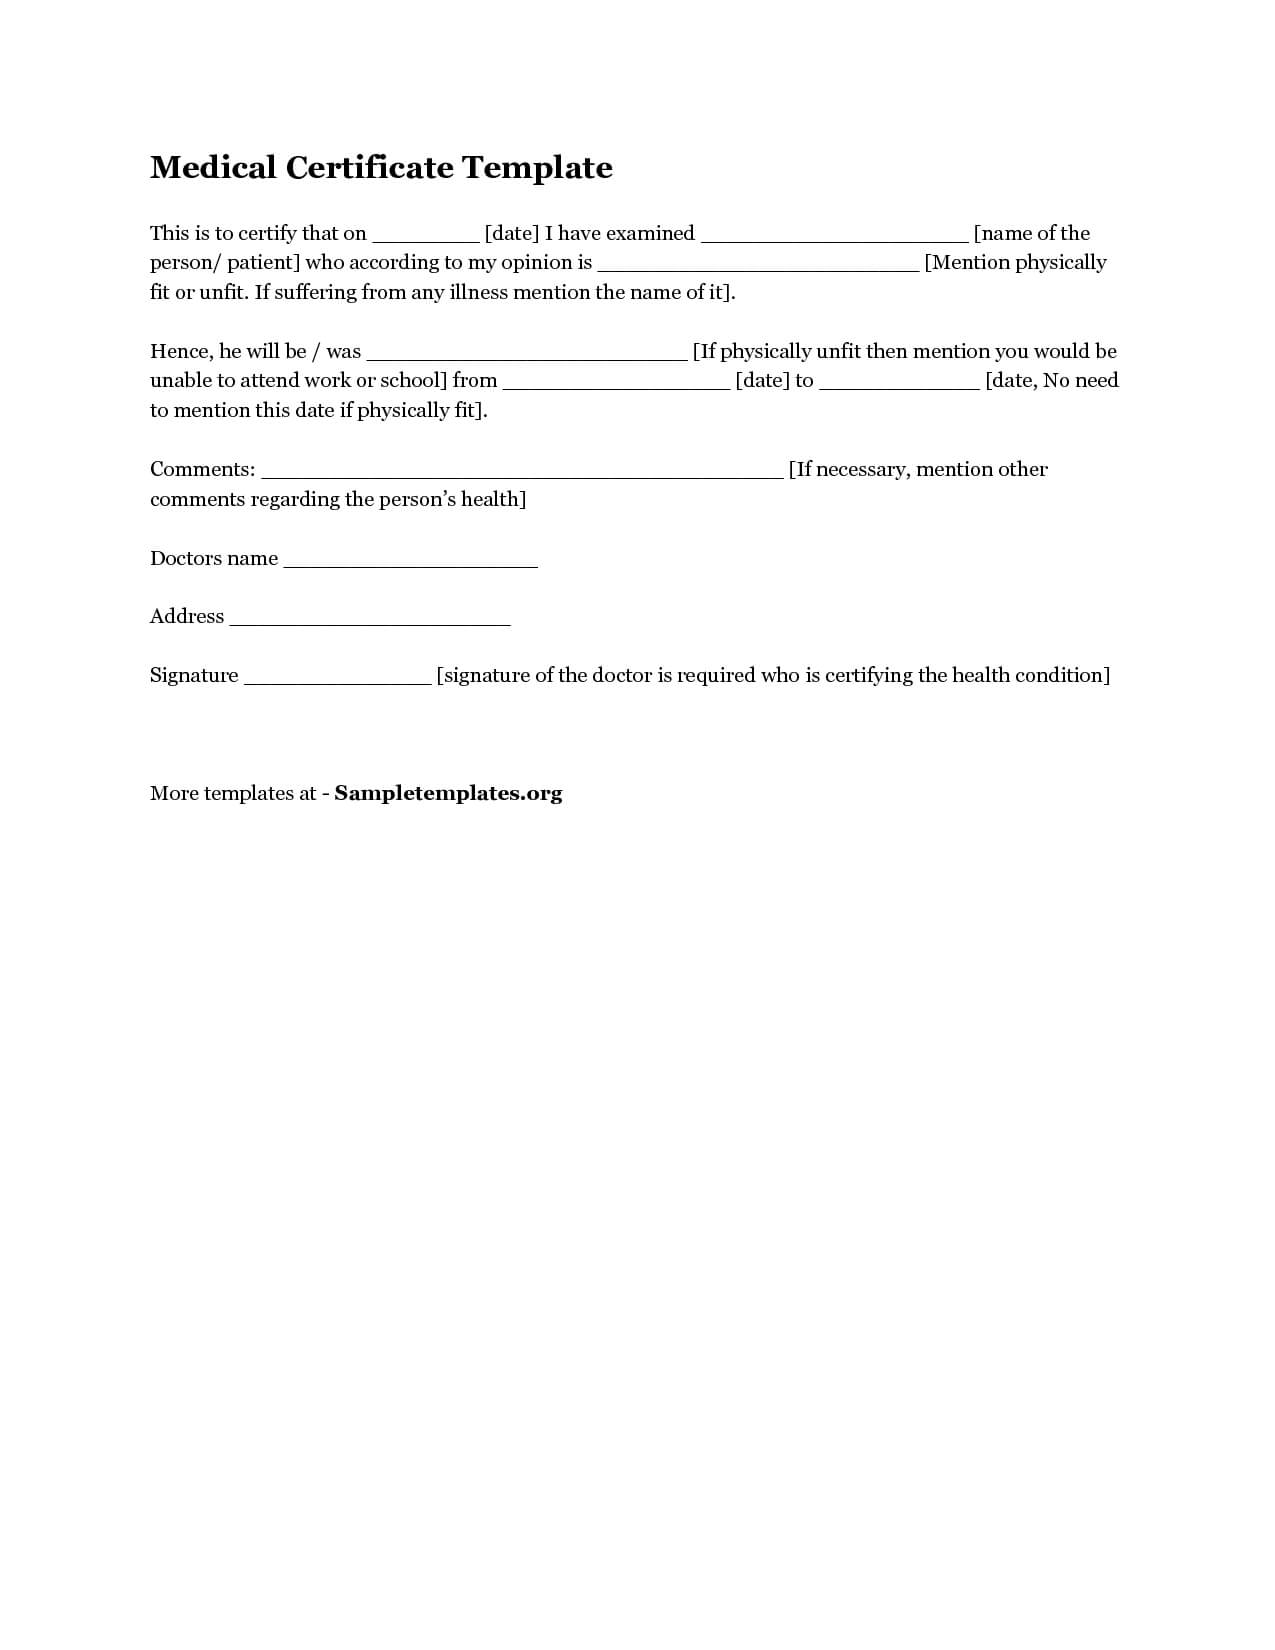 Download Medical Certificate Template1 | Certificate Throughout Fake Medical Certificate Template Download